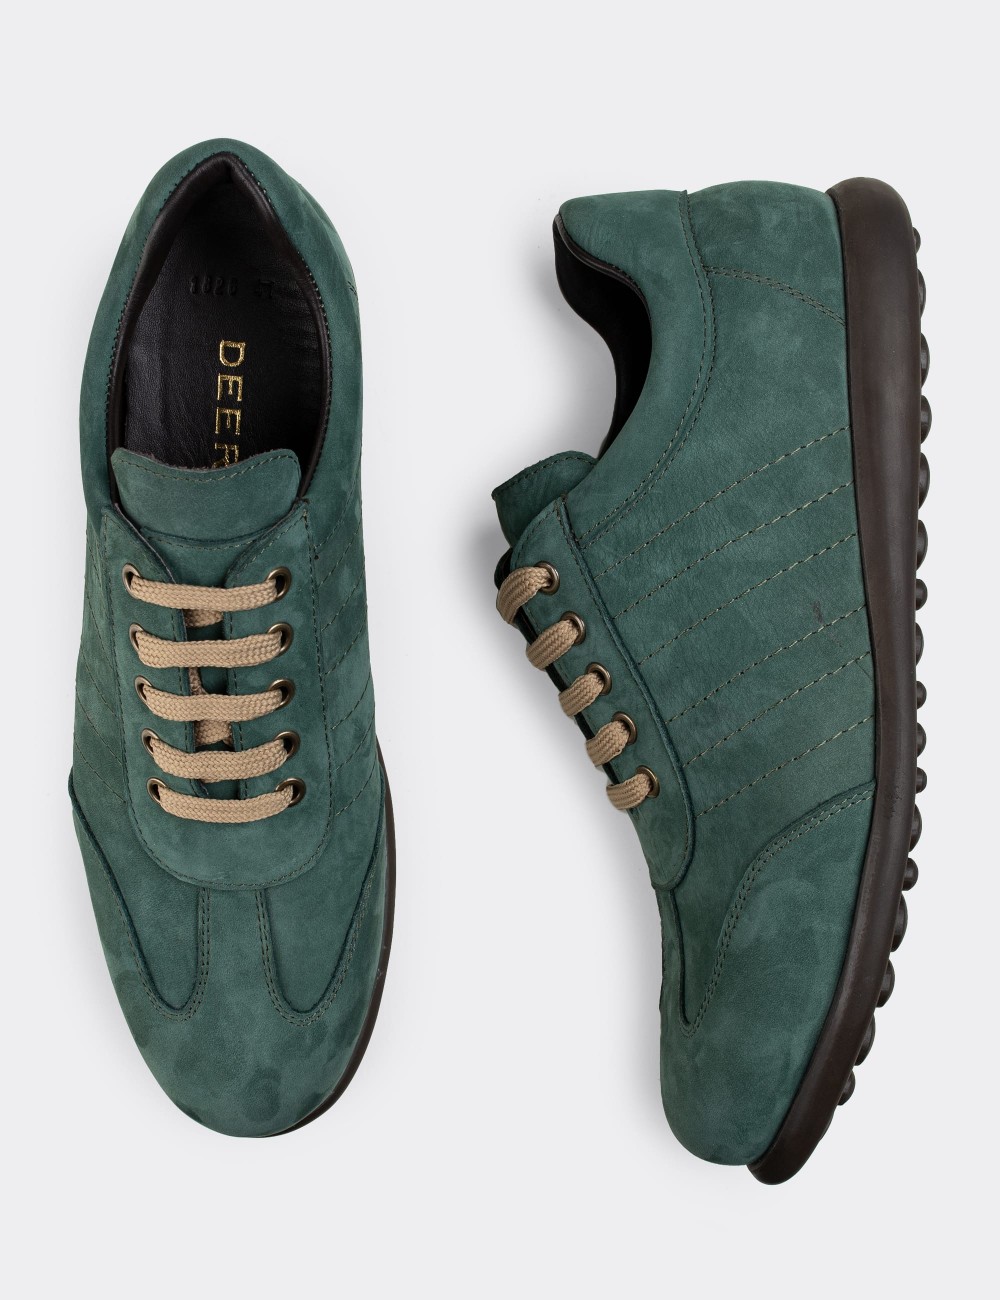 Green Nubuck Leather Lace-up Shoes - 01826MYSLC03